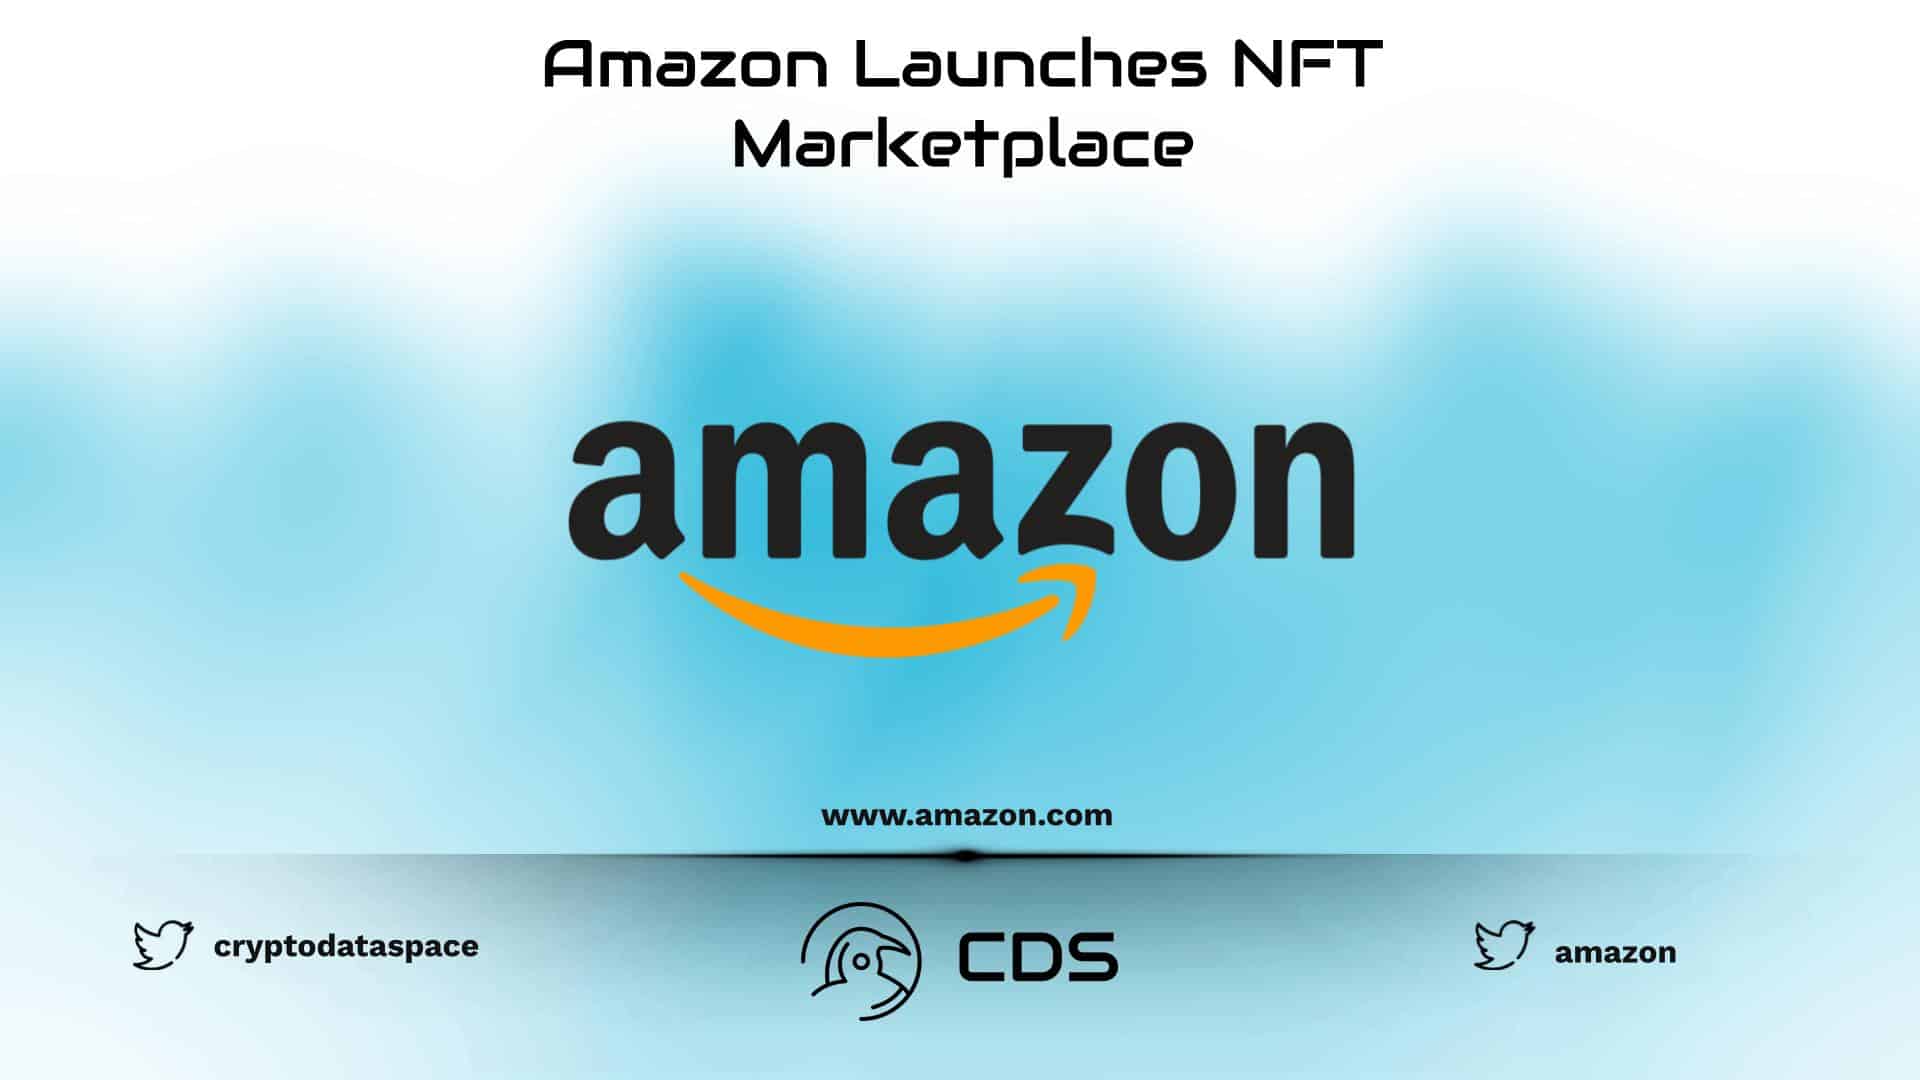 Amazon Launches NFT Marketplace